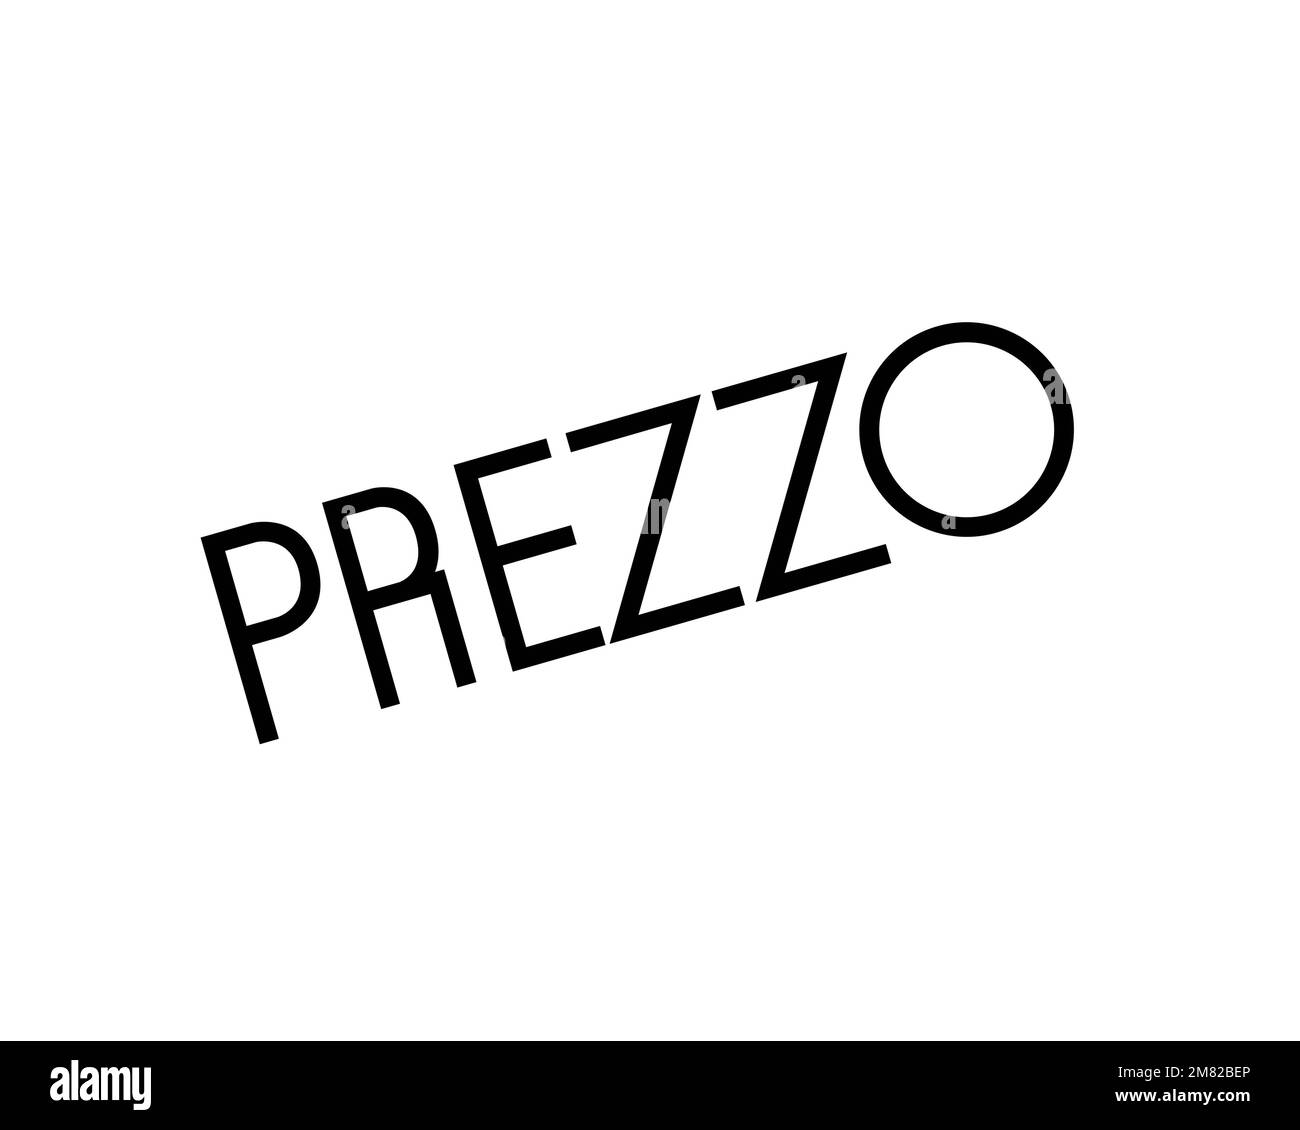 Prezzo Holdings, rotated logo, white background Stock Photo